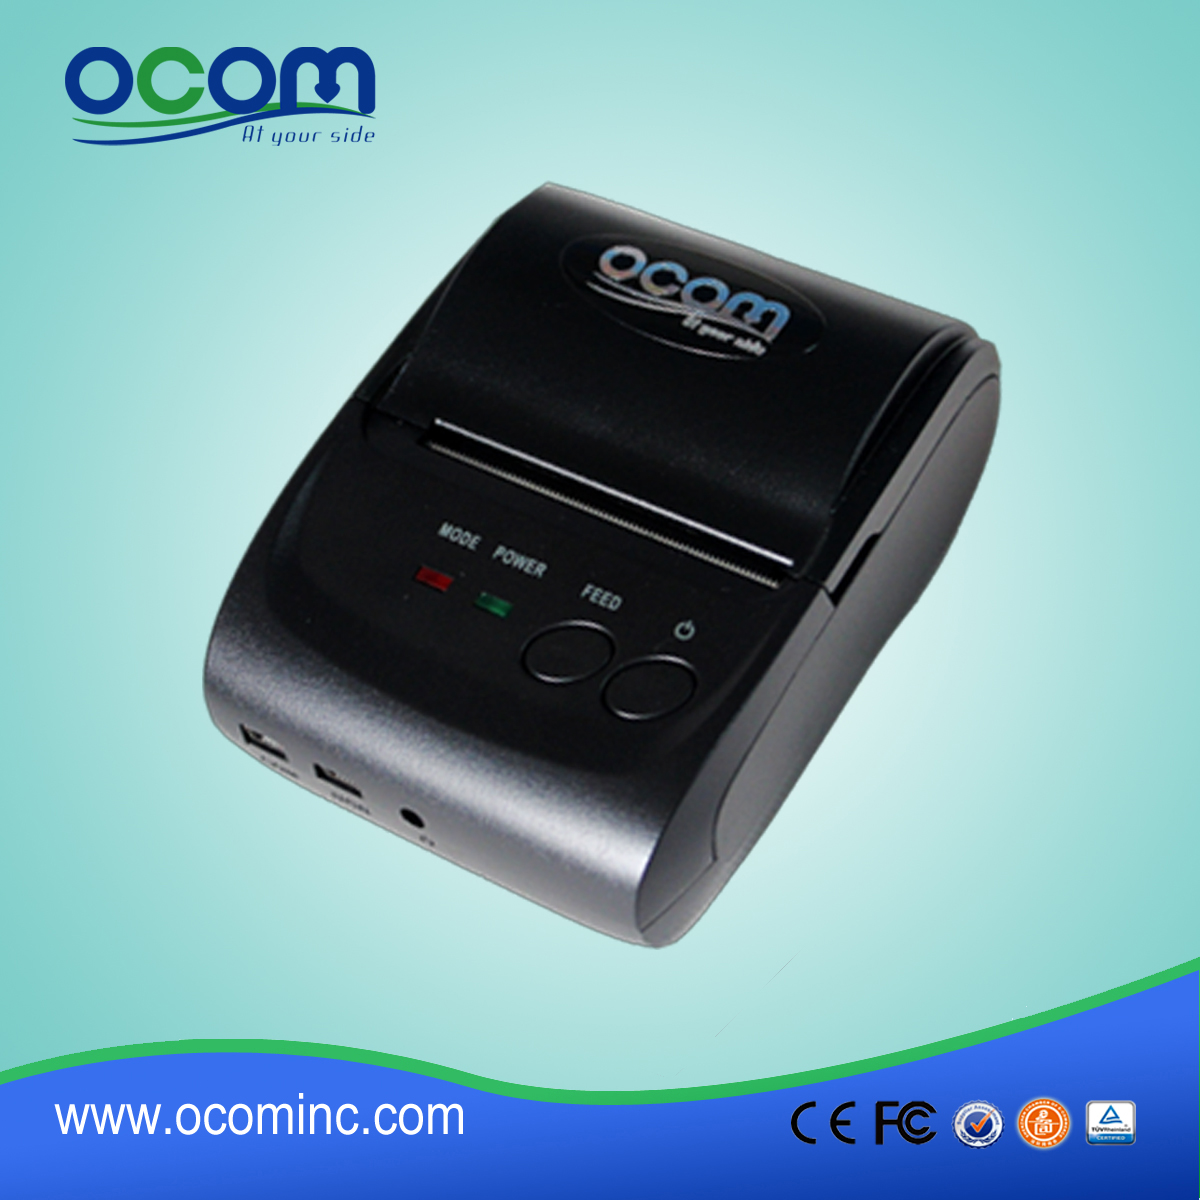 OCPP-M05: conductor térmica impresora de la posición de alta calidad, la impresora térmica